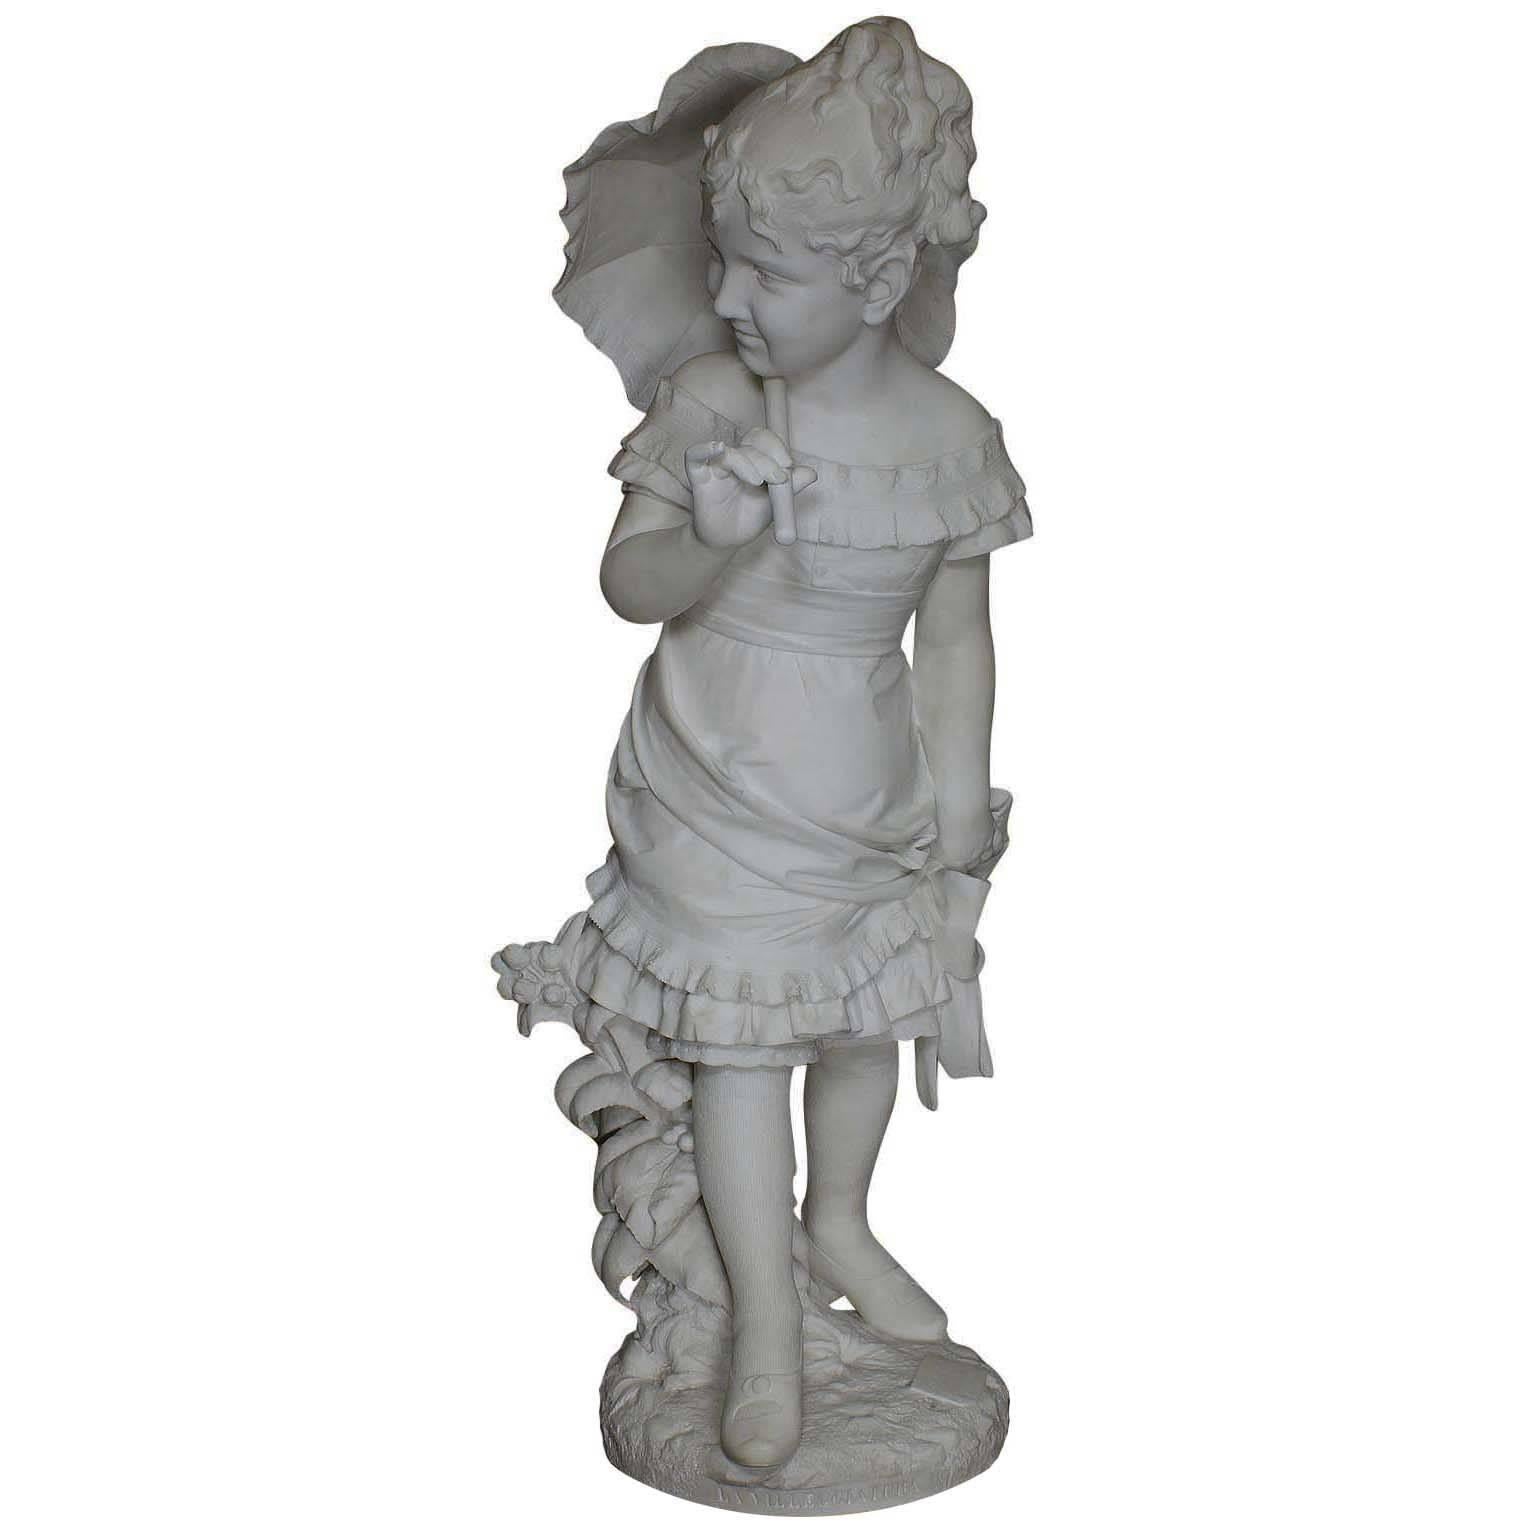 Italian 19th Century Carrara Marble Figure "La Villeggiatura" Girl with Parasol